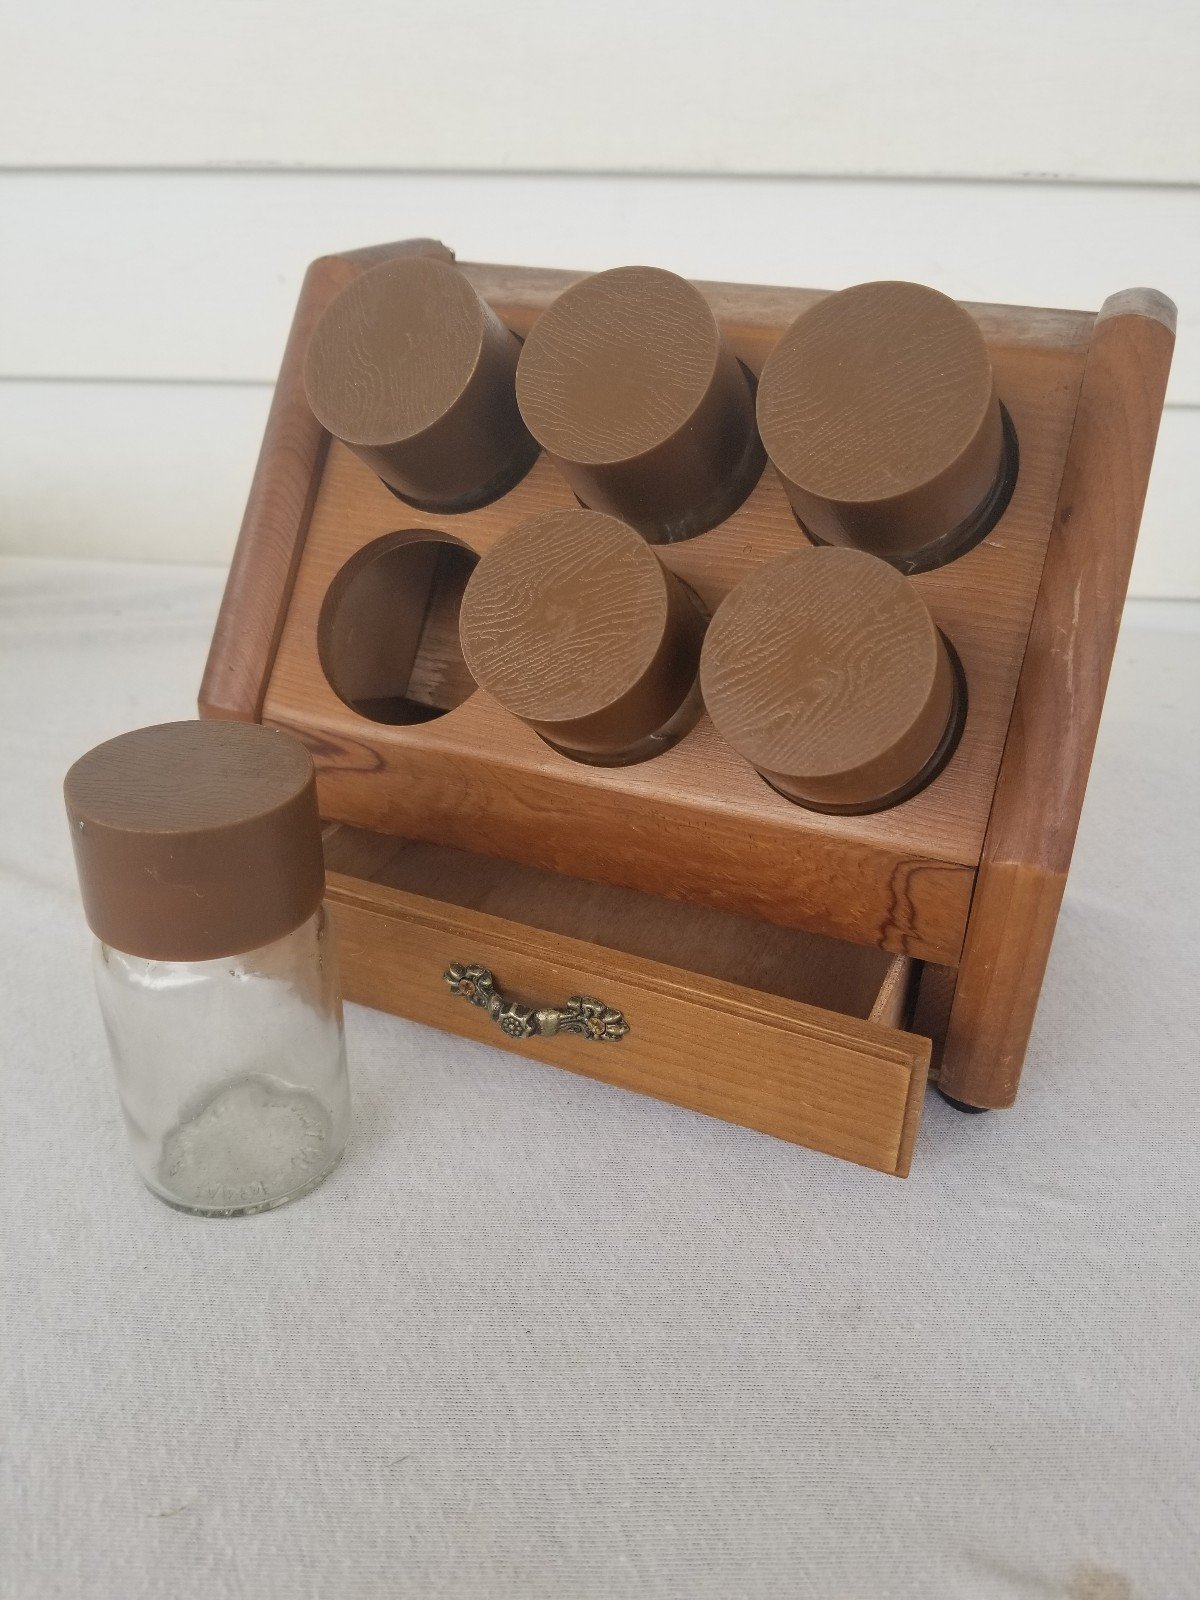 Wooden Spice Rack w/ Glass Bottles & Drawer dYpFCbv6m